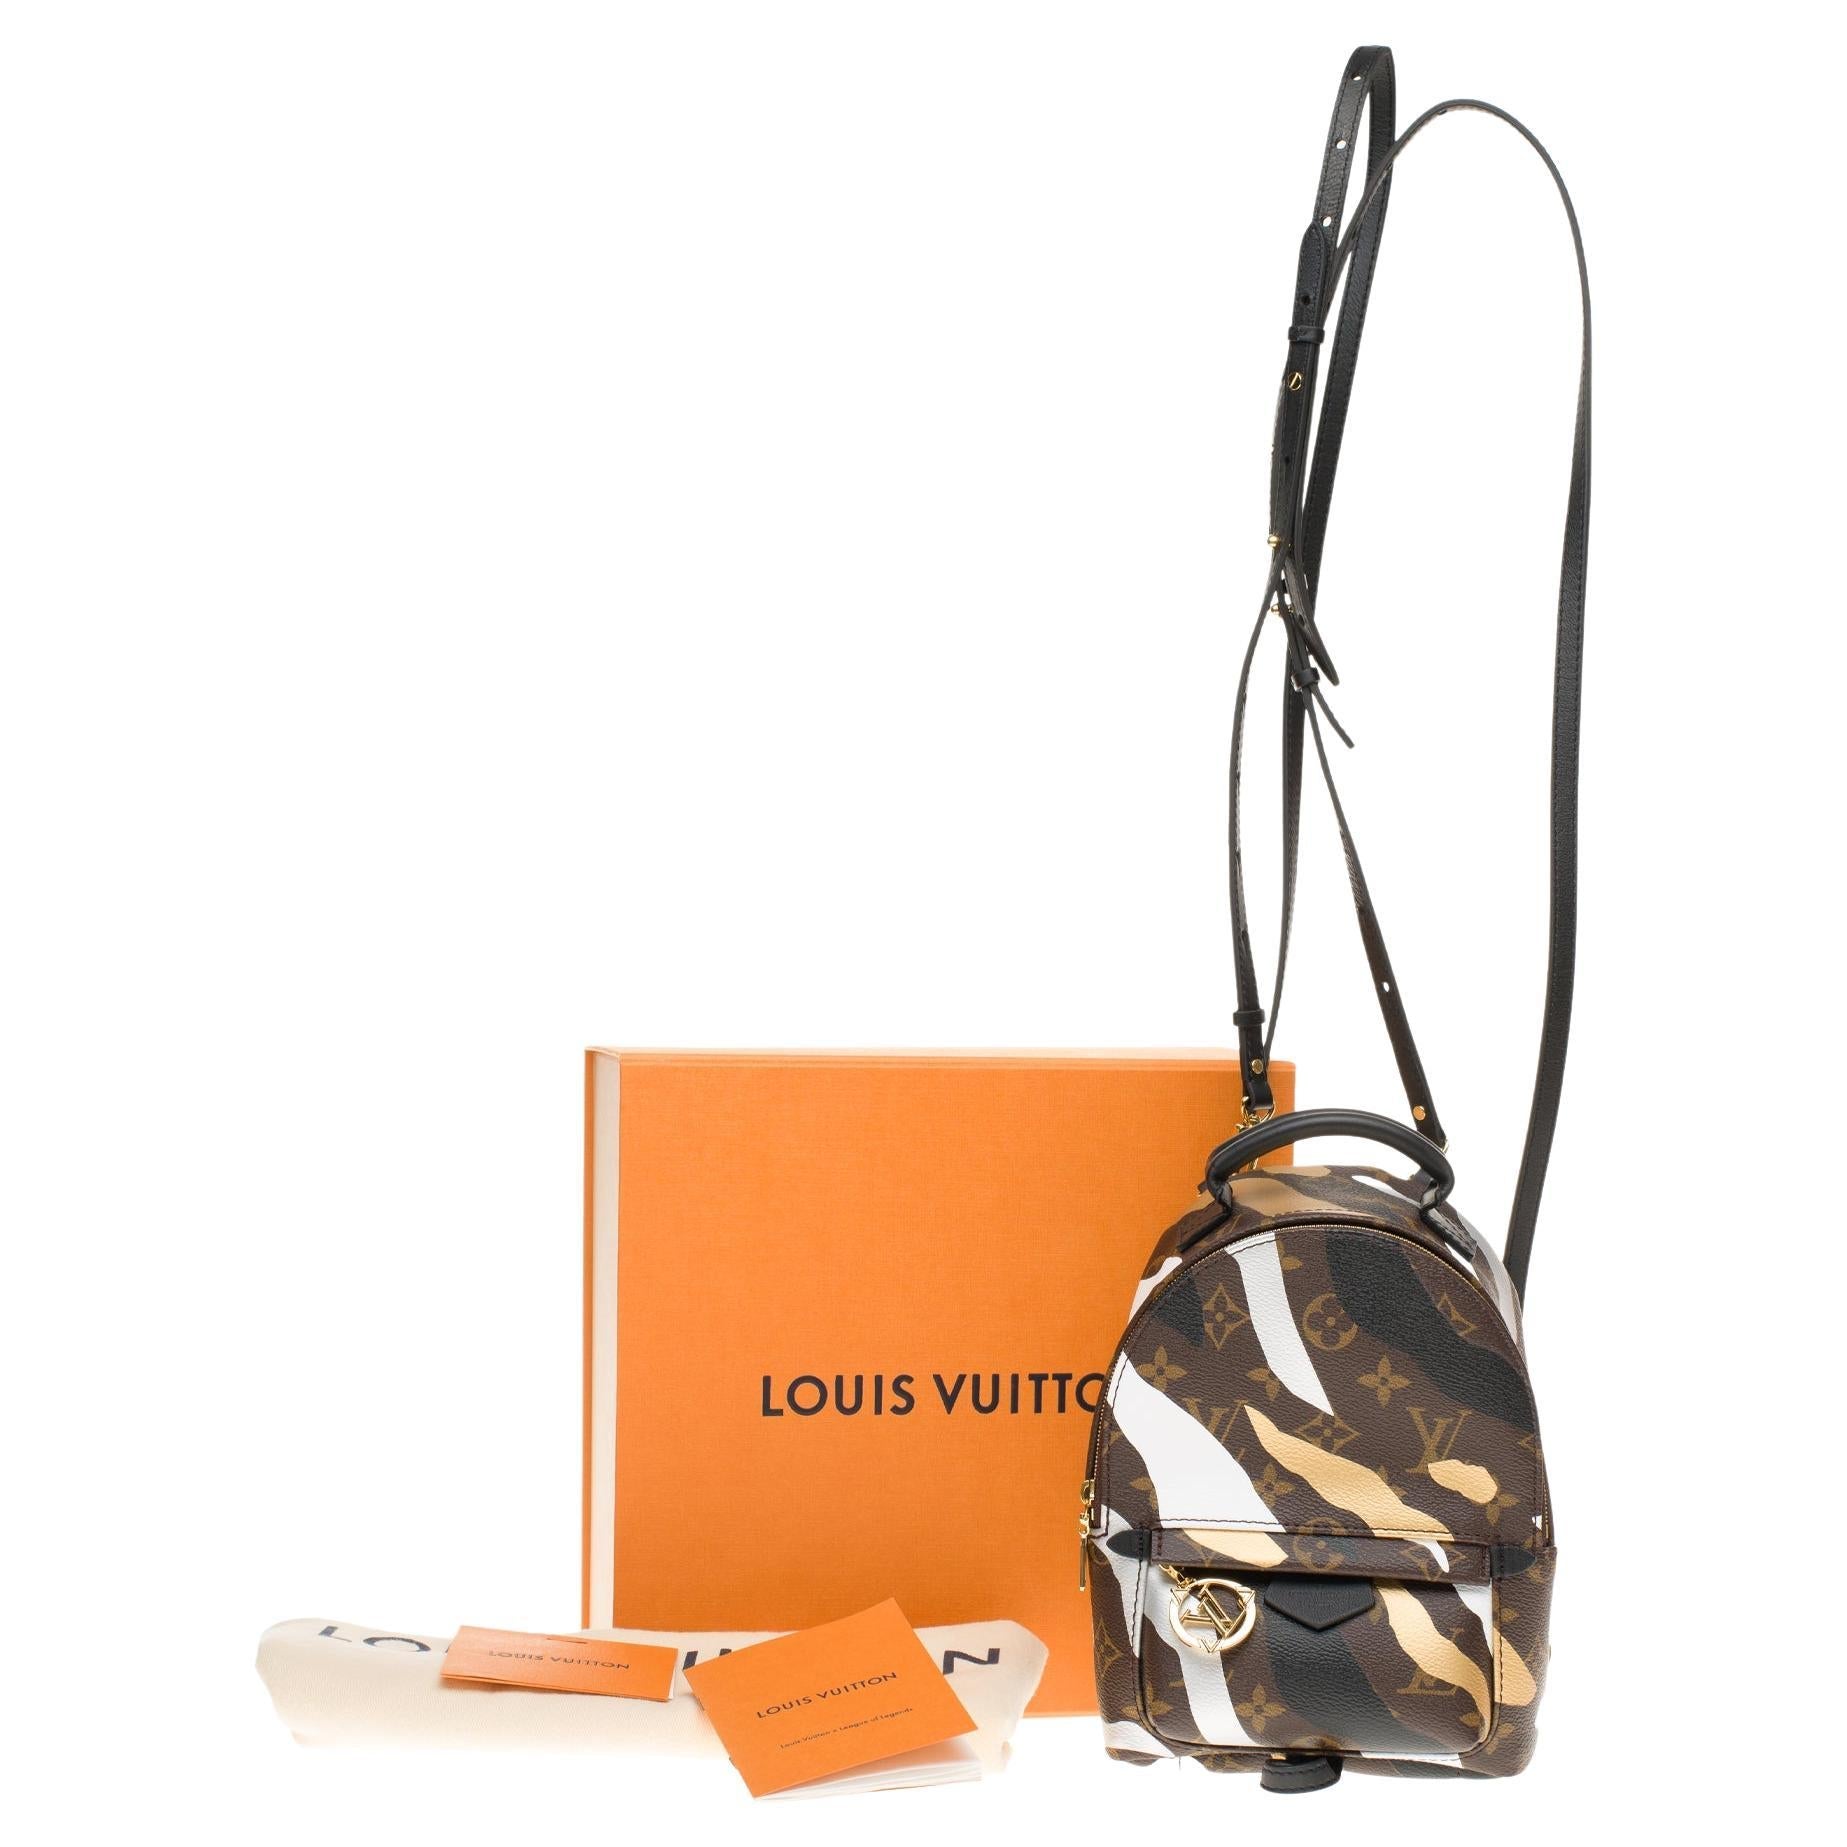 BRAND NEW-Limited edition-Louis Vuitton Belt League of legends